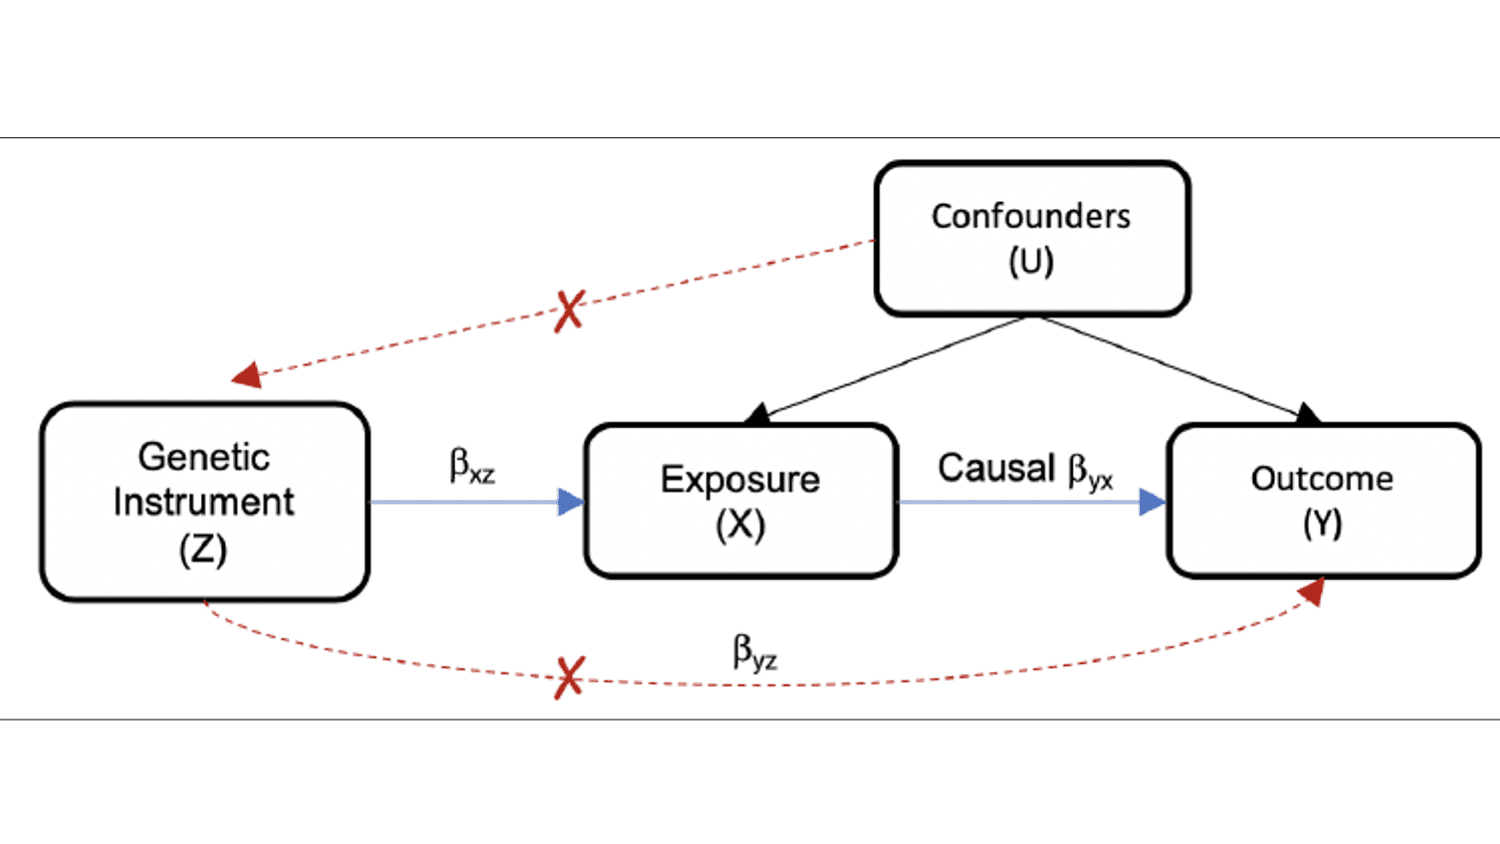 Figure 1: Model for a Mendelian randomization study.